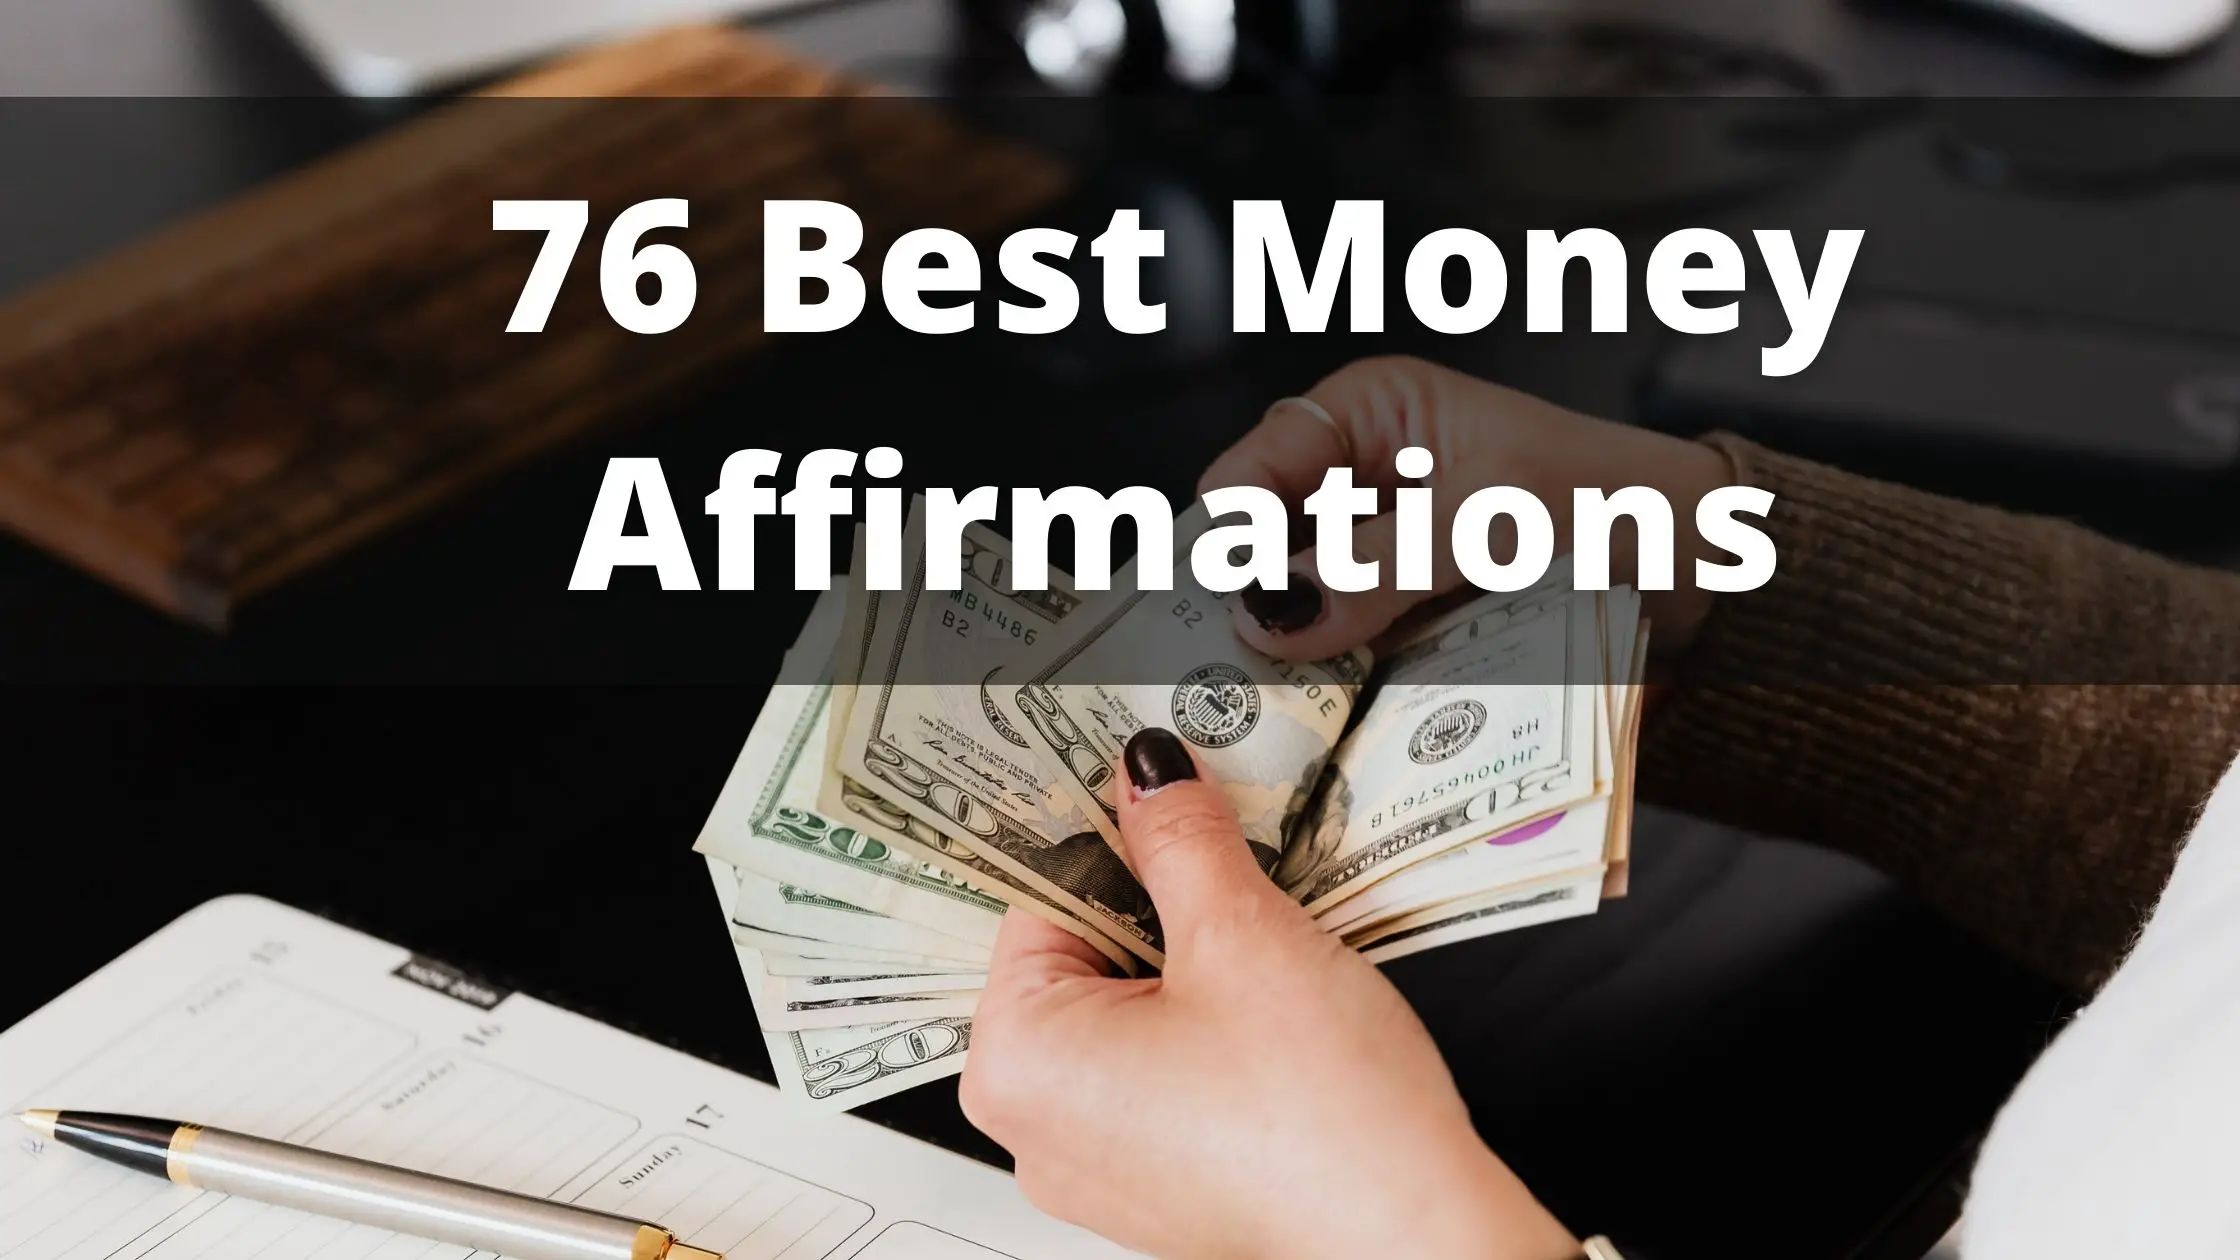 76 Best Money Affirmations To Manifest Money Now